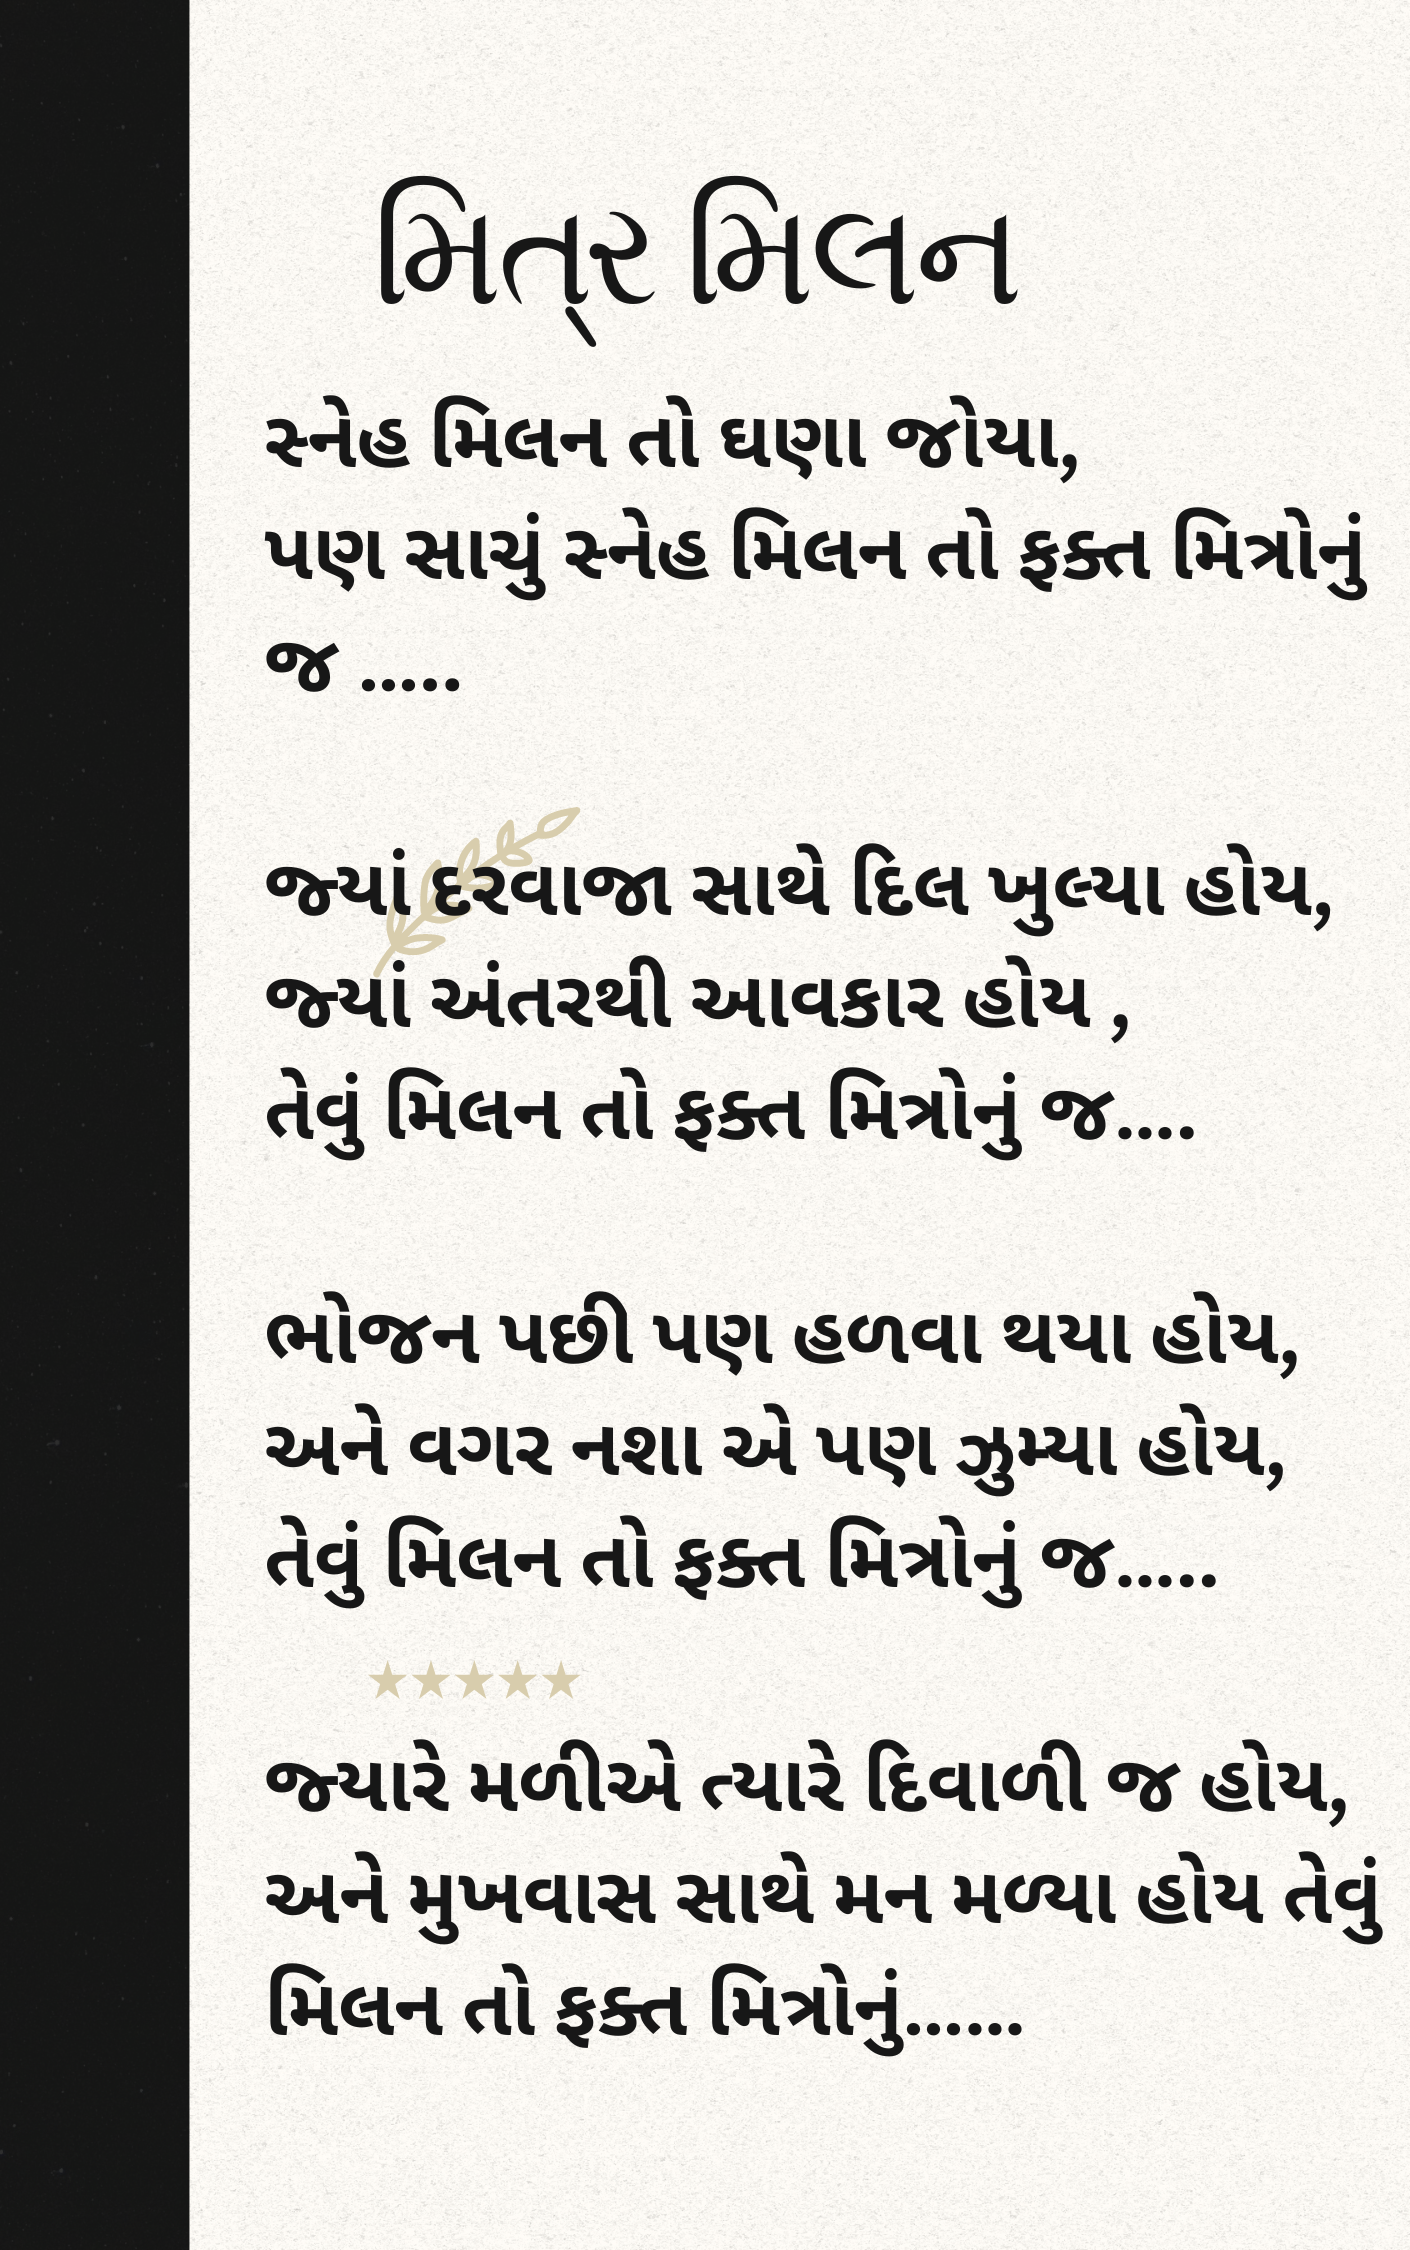 Gujarati-Poem-on-Friendship-and-Friends